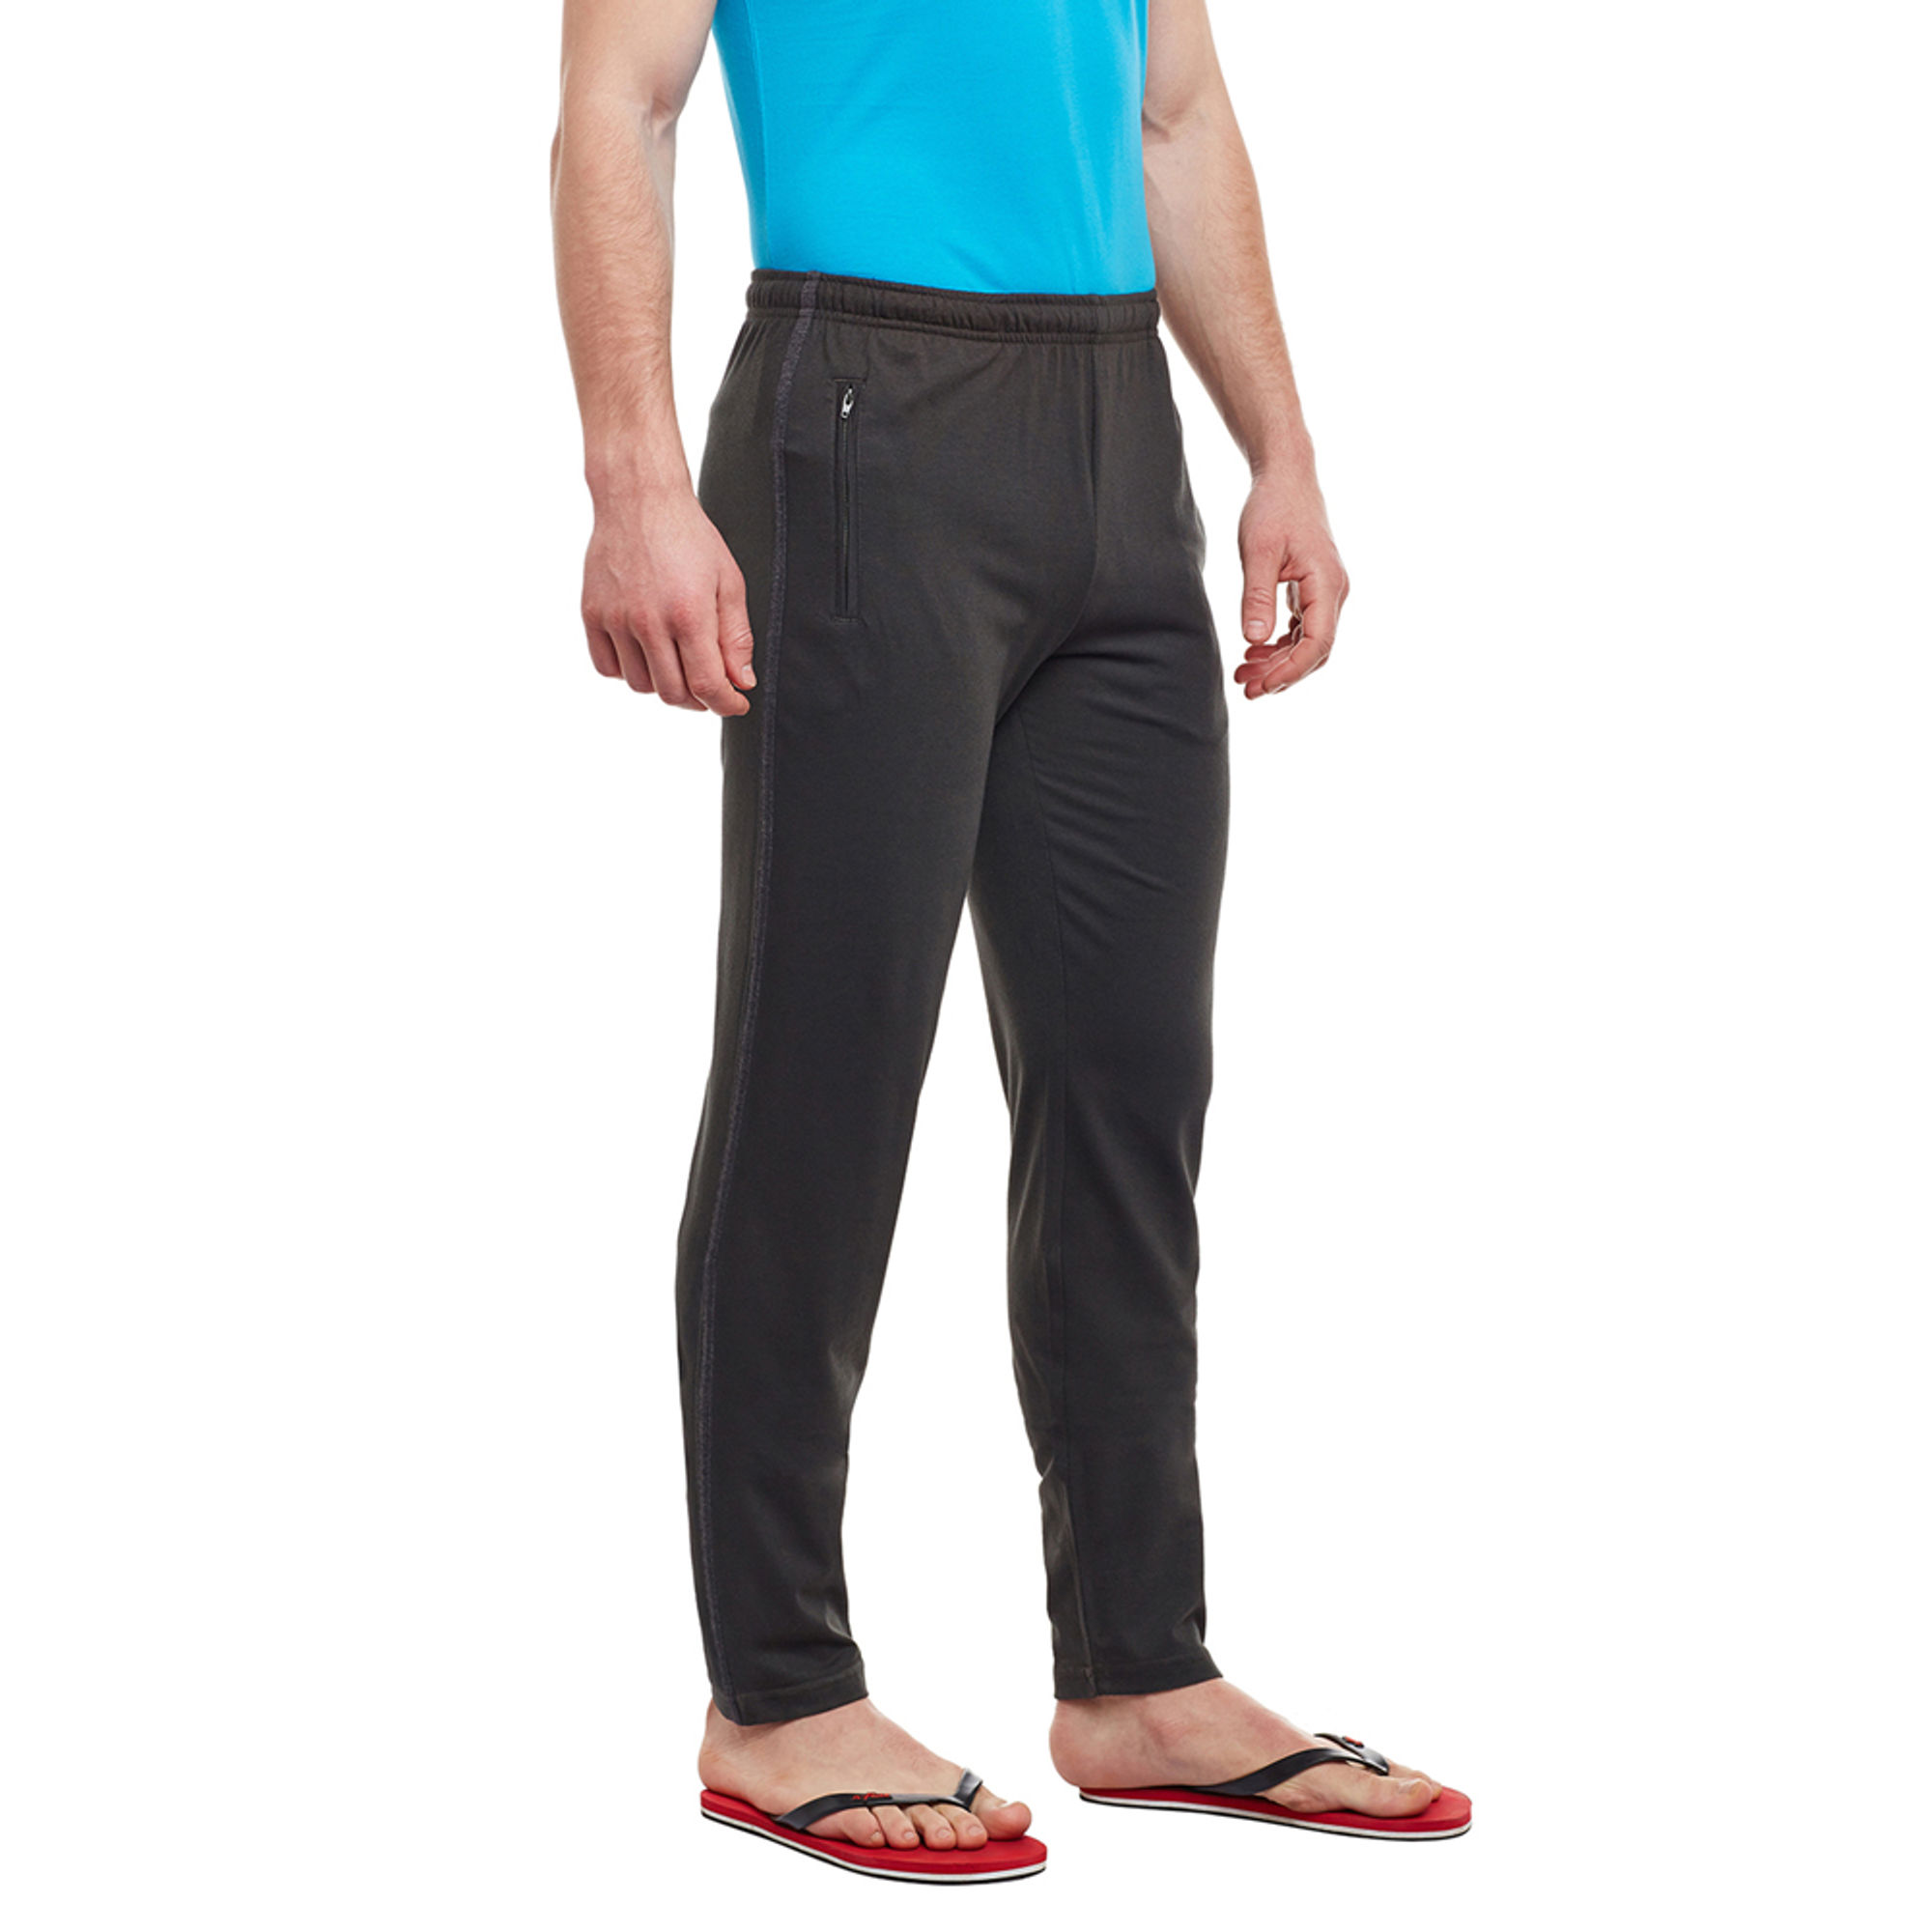 GAIAM Zipper Active Pants for Men